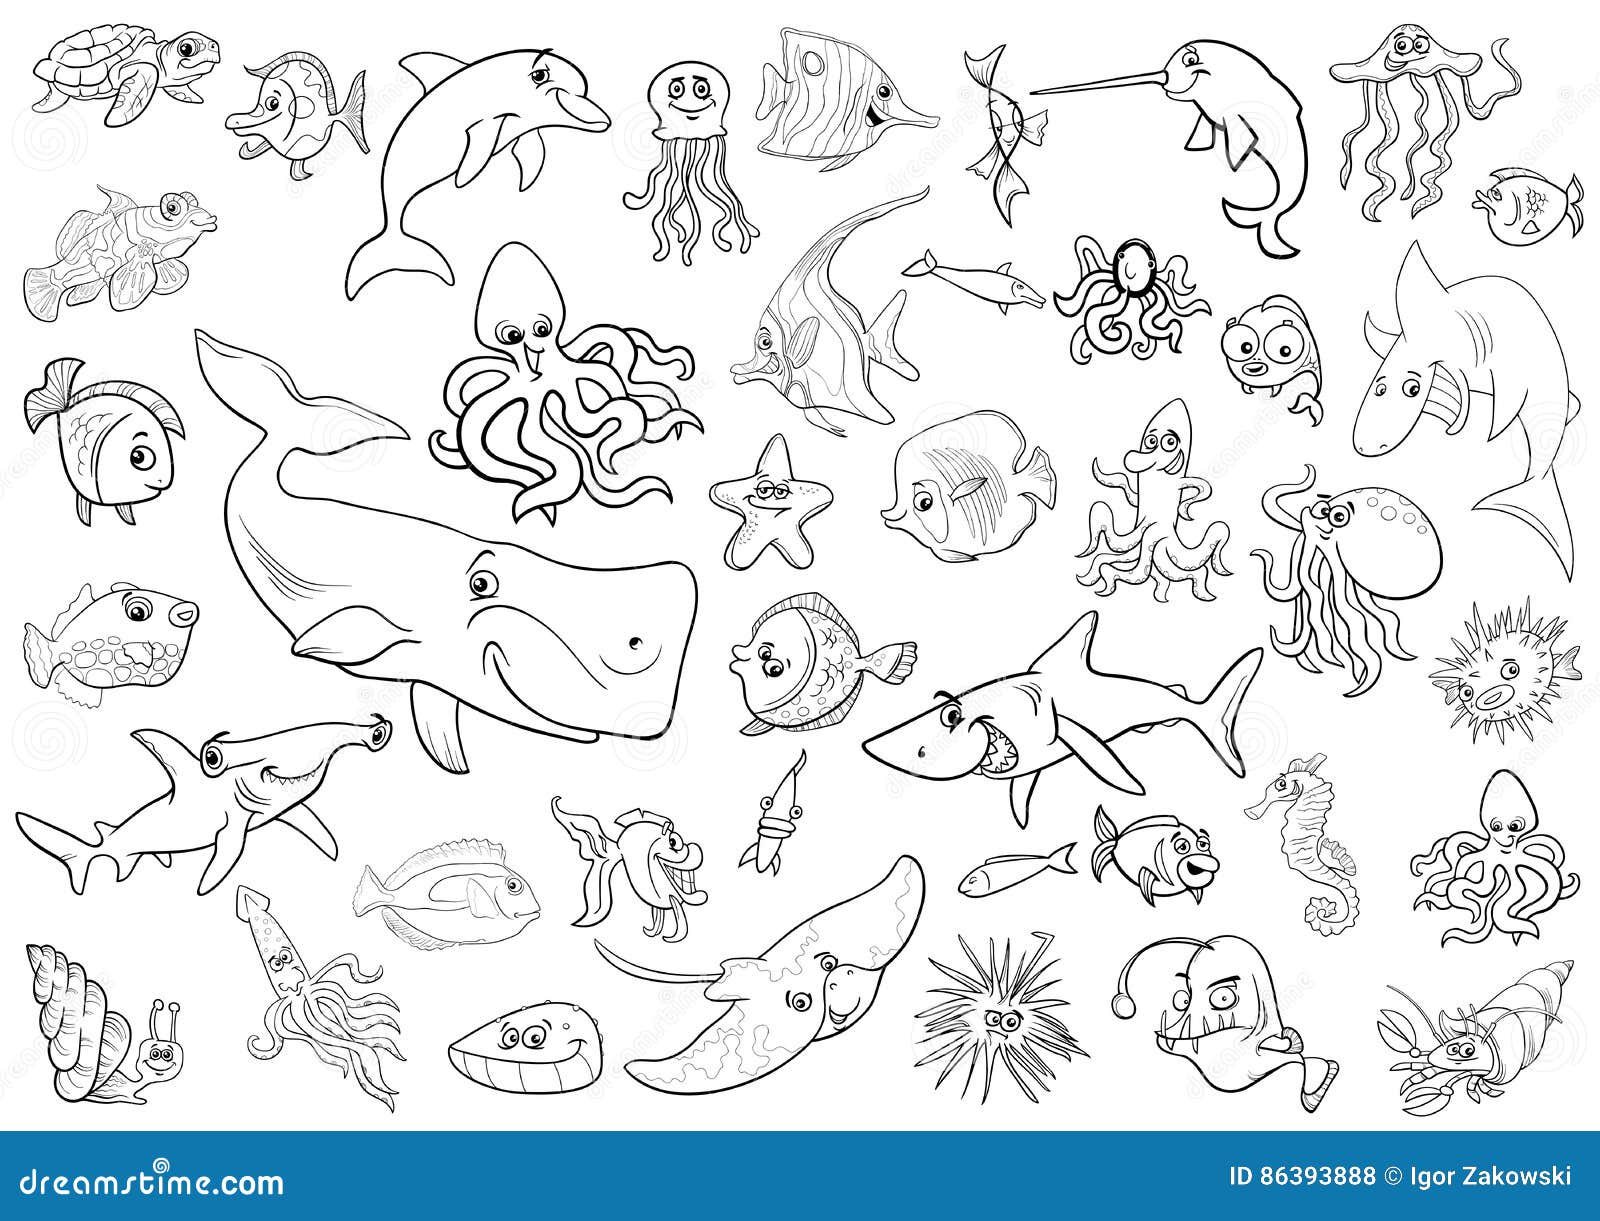 Sea life animals coloring page stock vector